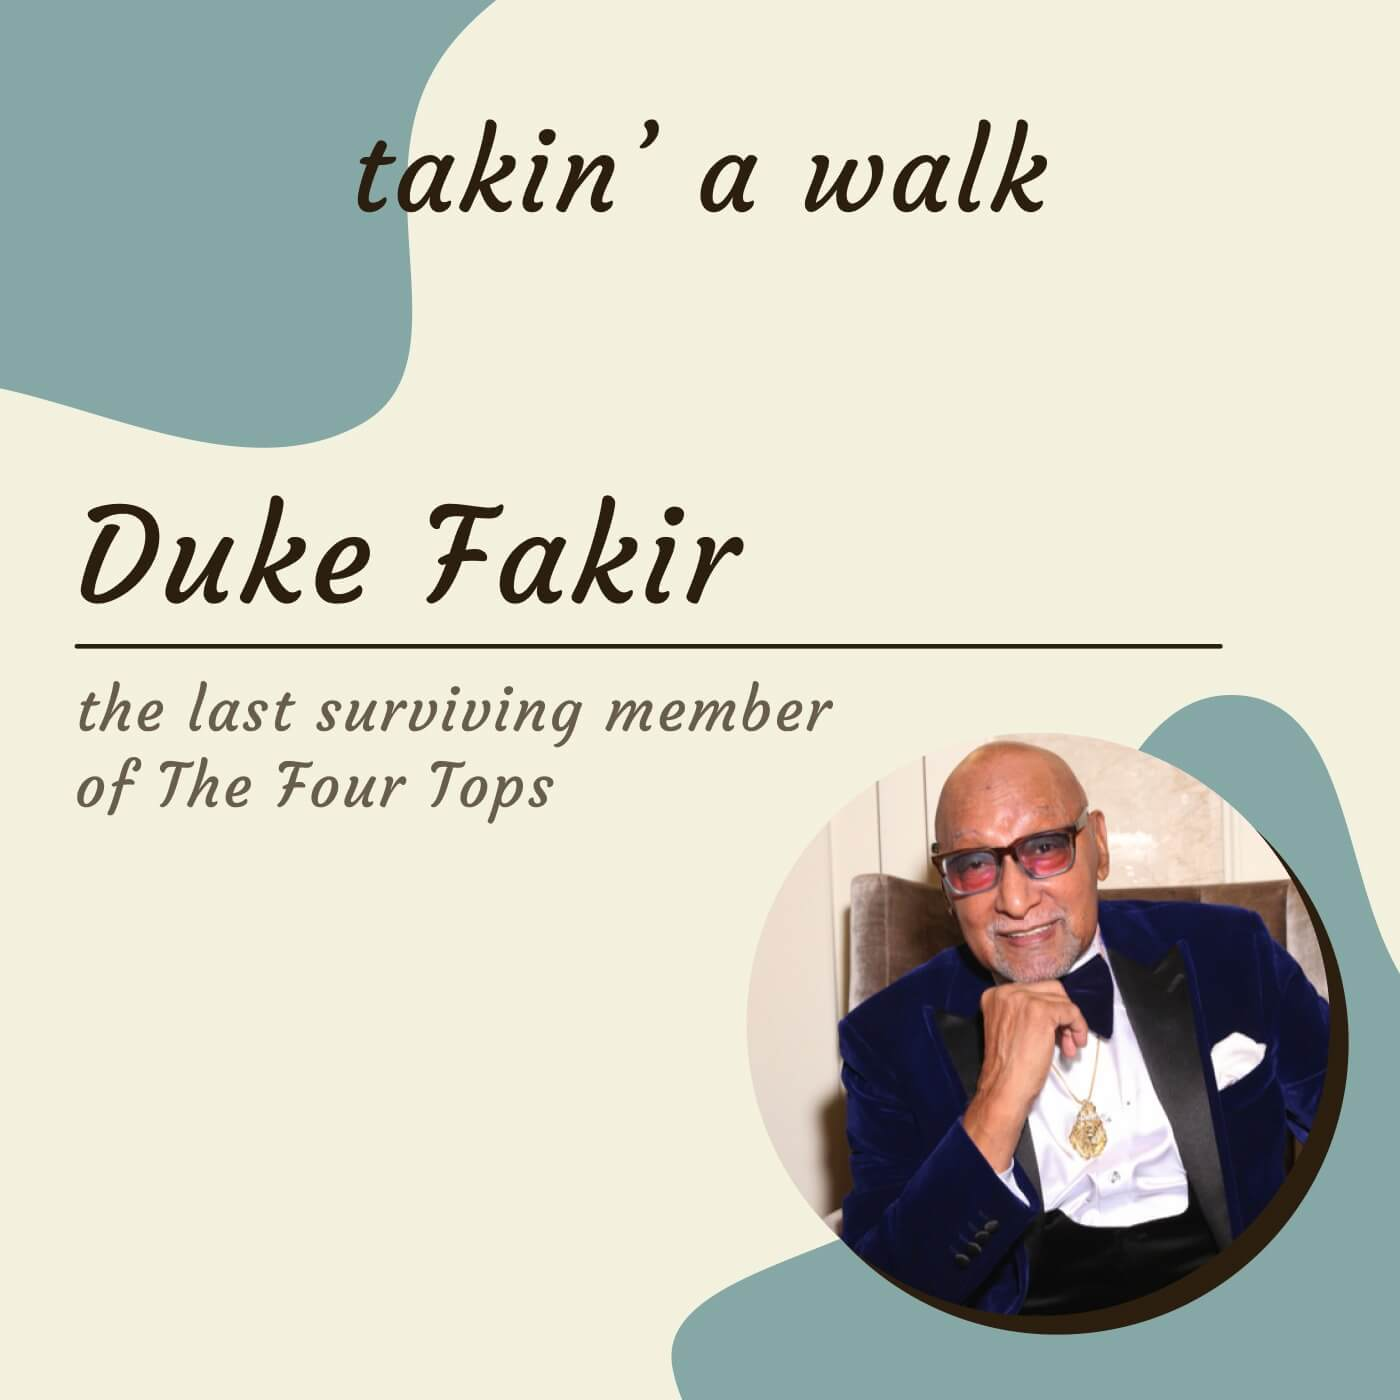 Next on Takin' A Walk, Duke Fakir, The Last Remaining Member of The Four Tops.